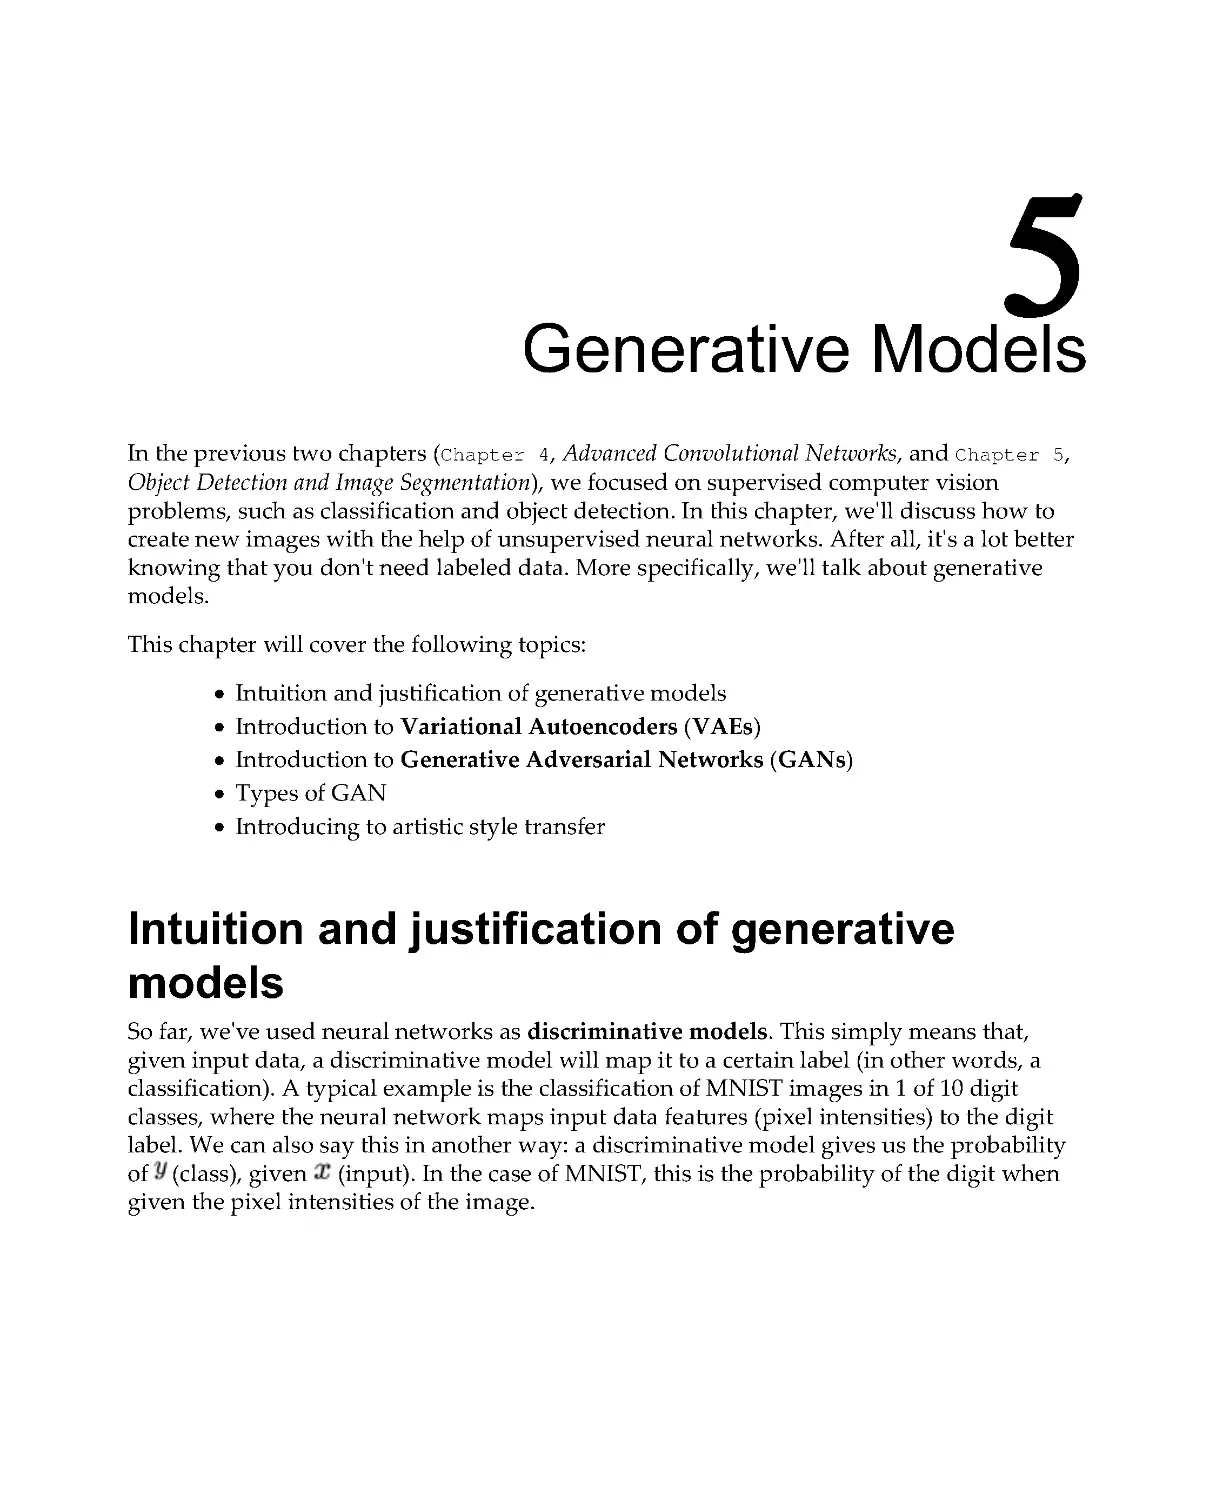 Chapter 5: Generative Models